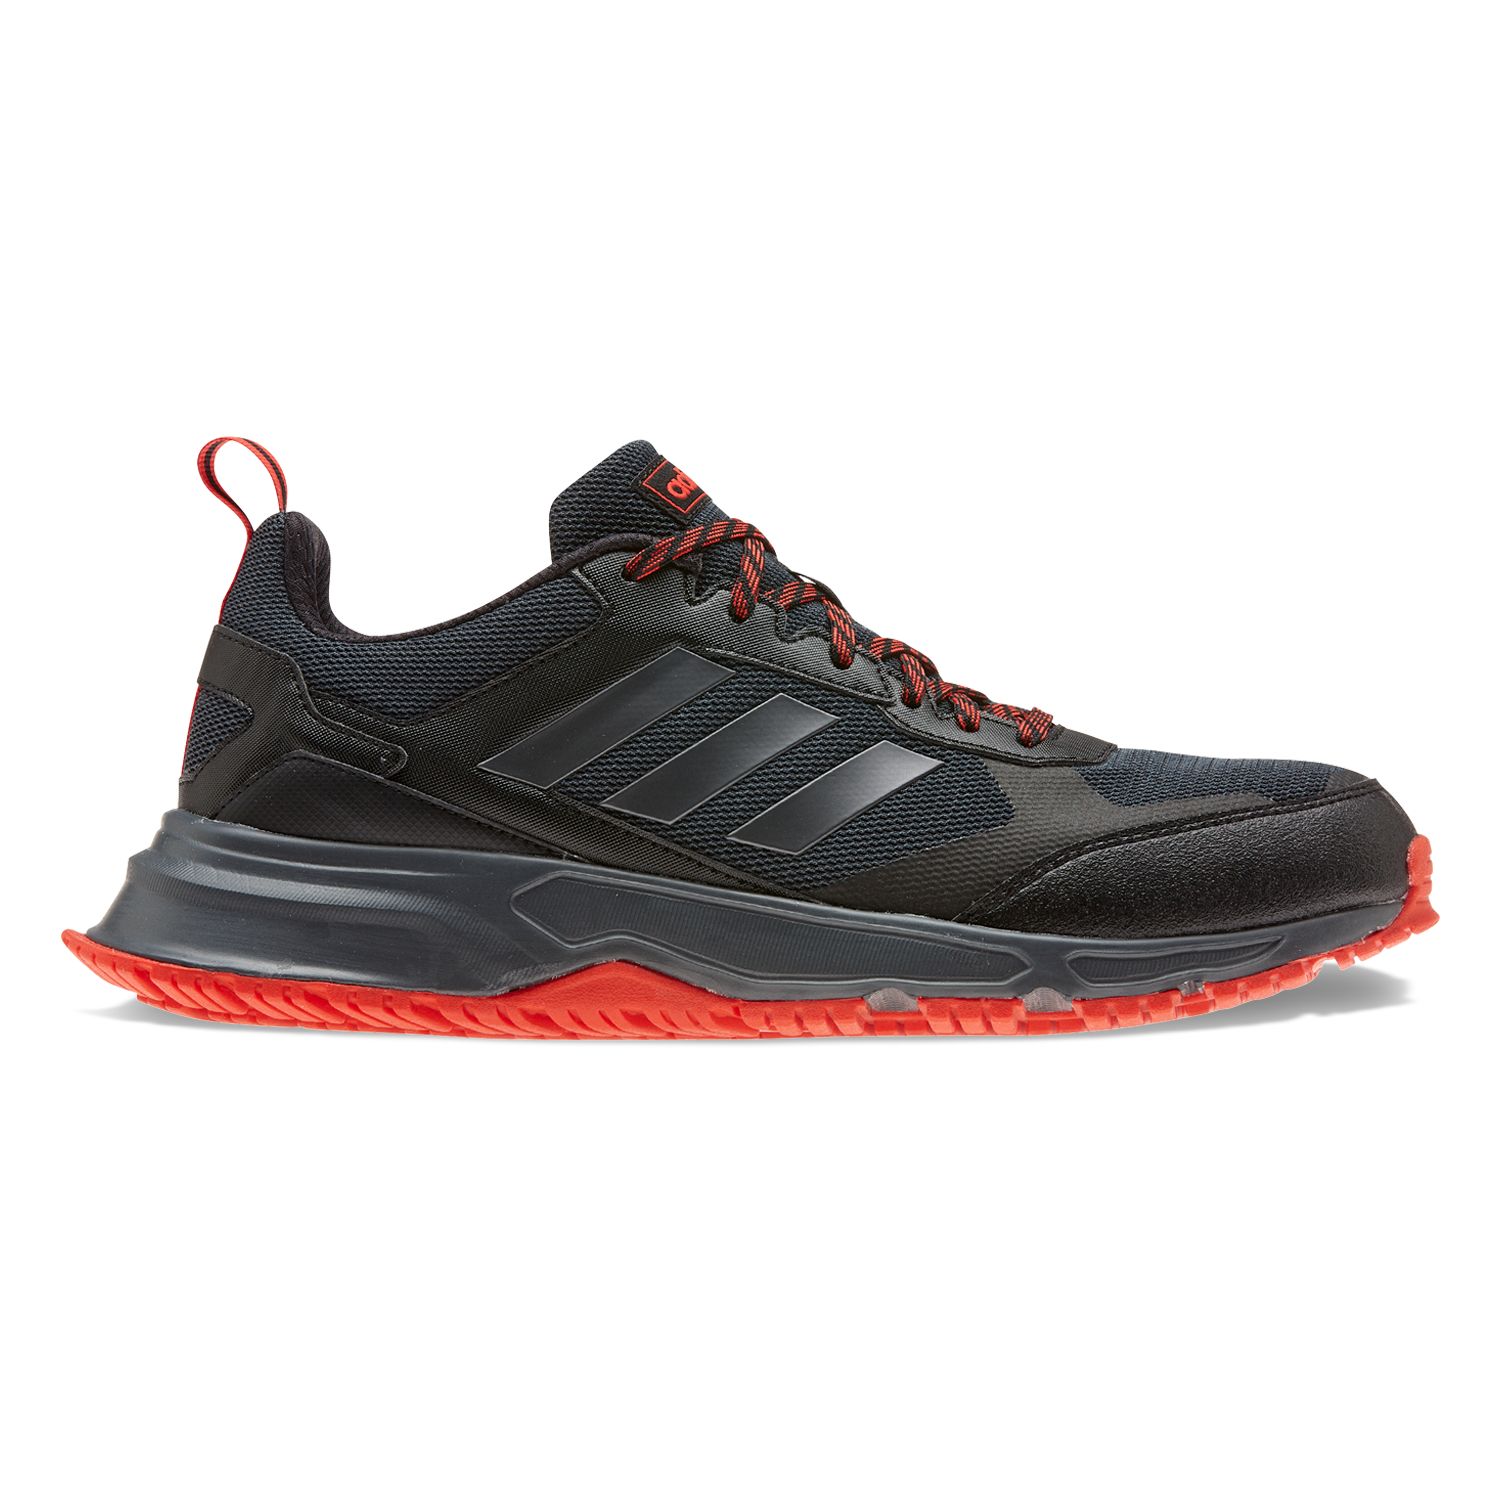 adidas Rockadia 2K20 Men's Hiking Shoes